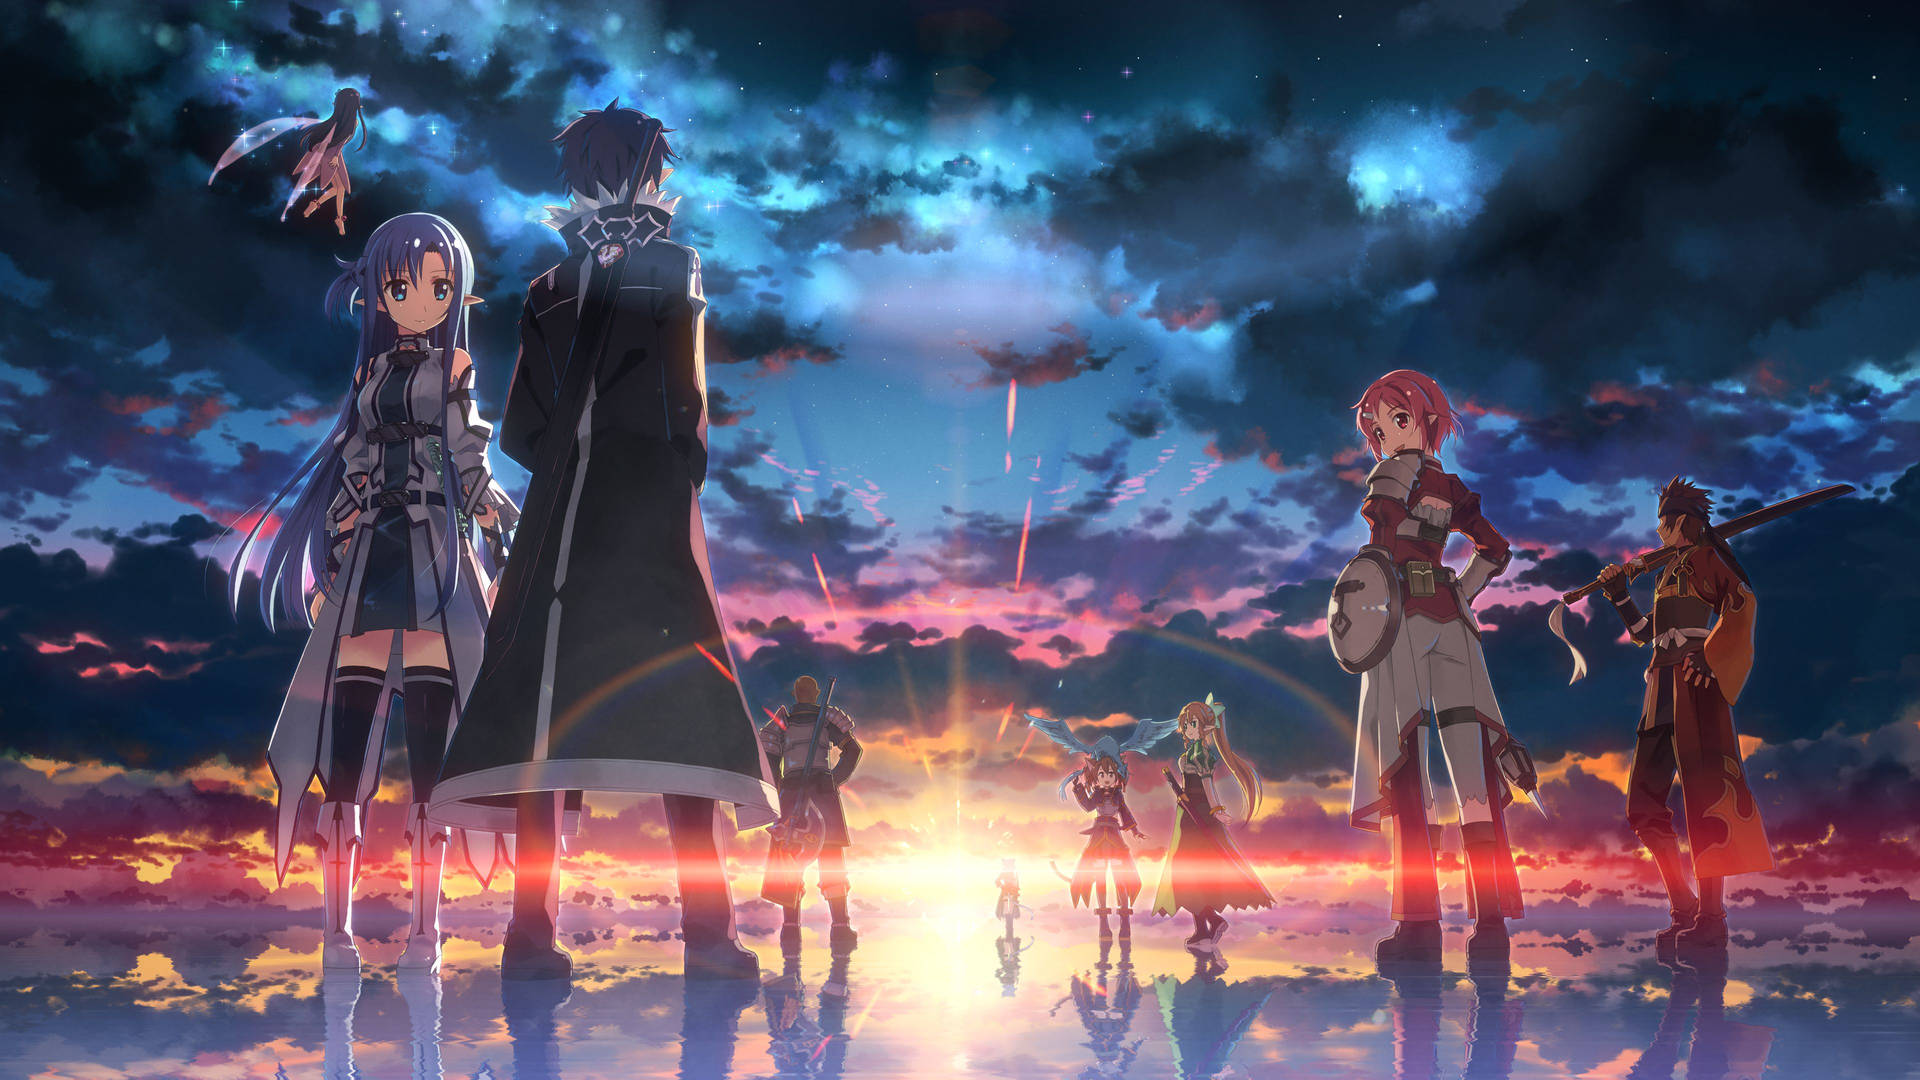 Anime Art Sao Characters Sunset Background